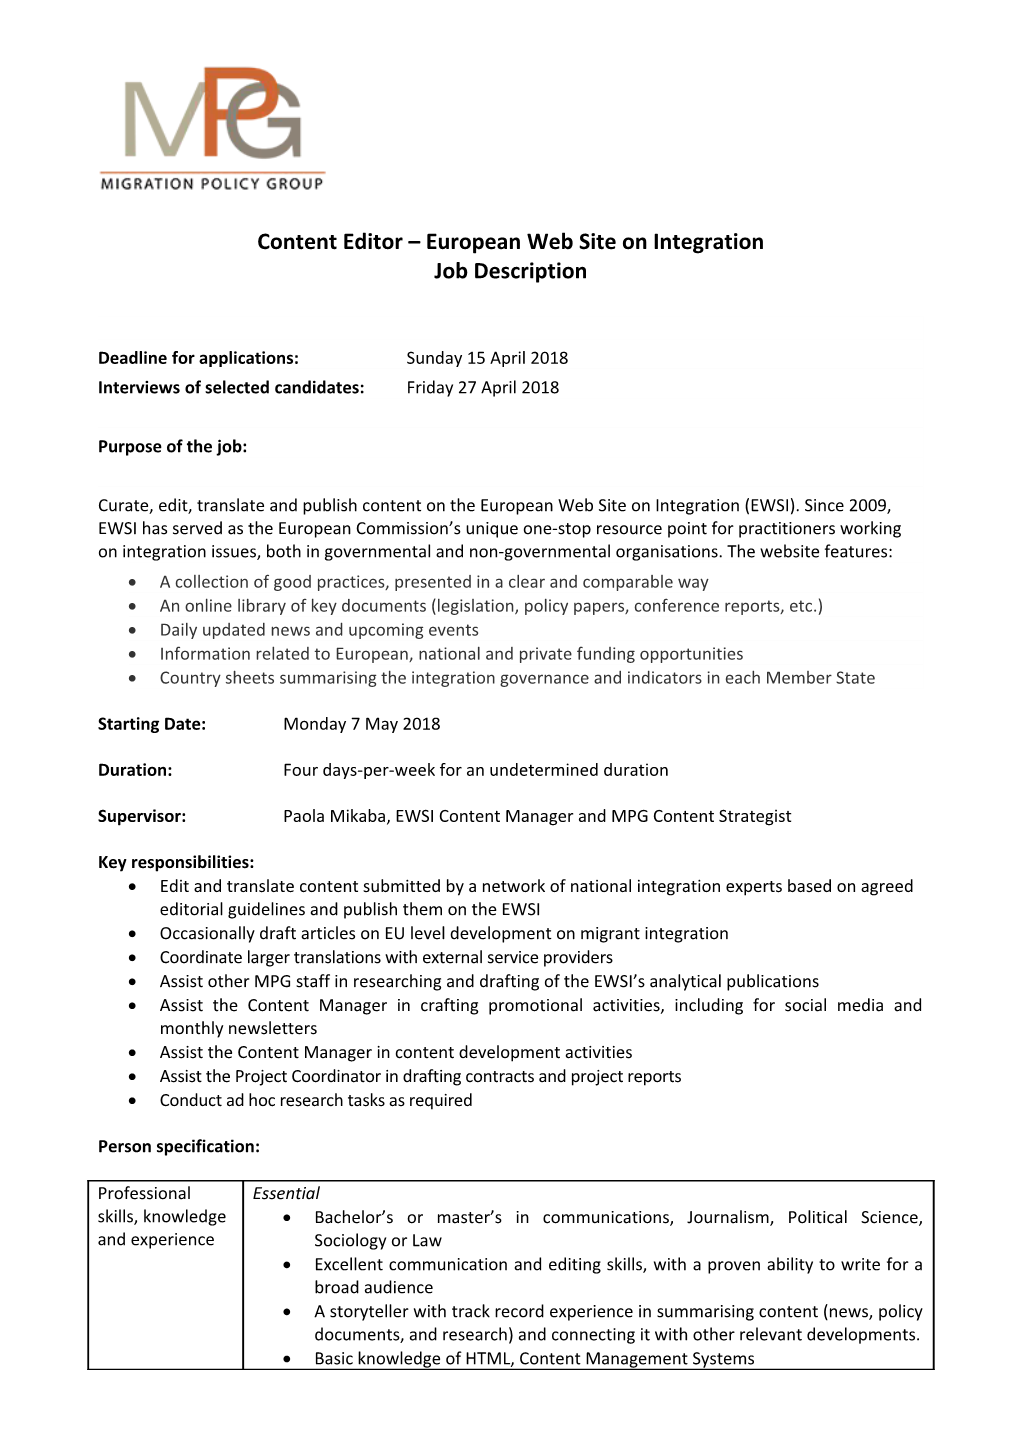 Content Editor European Web Site on Integration